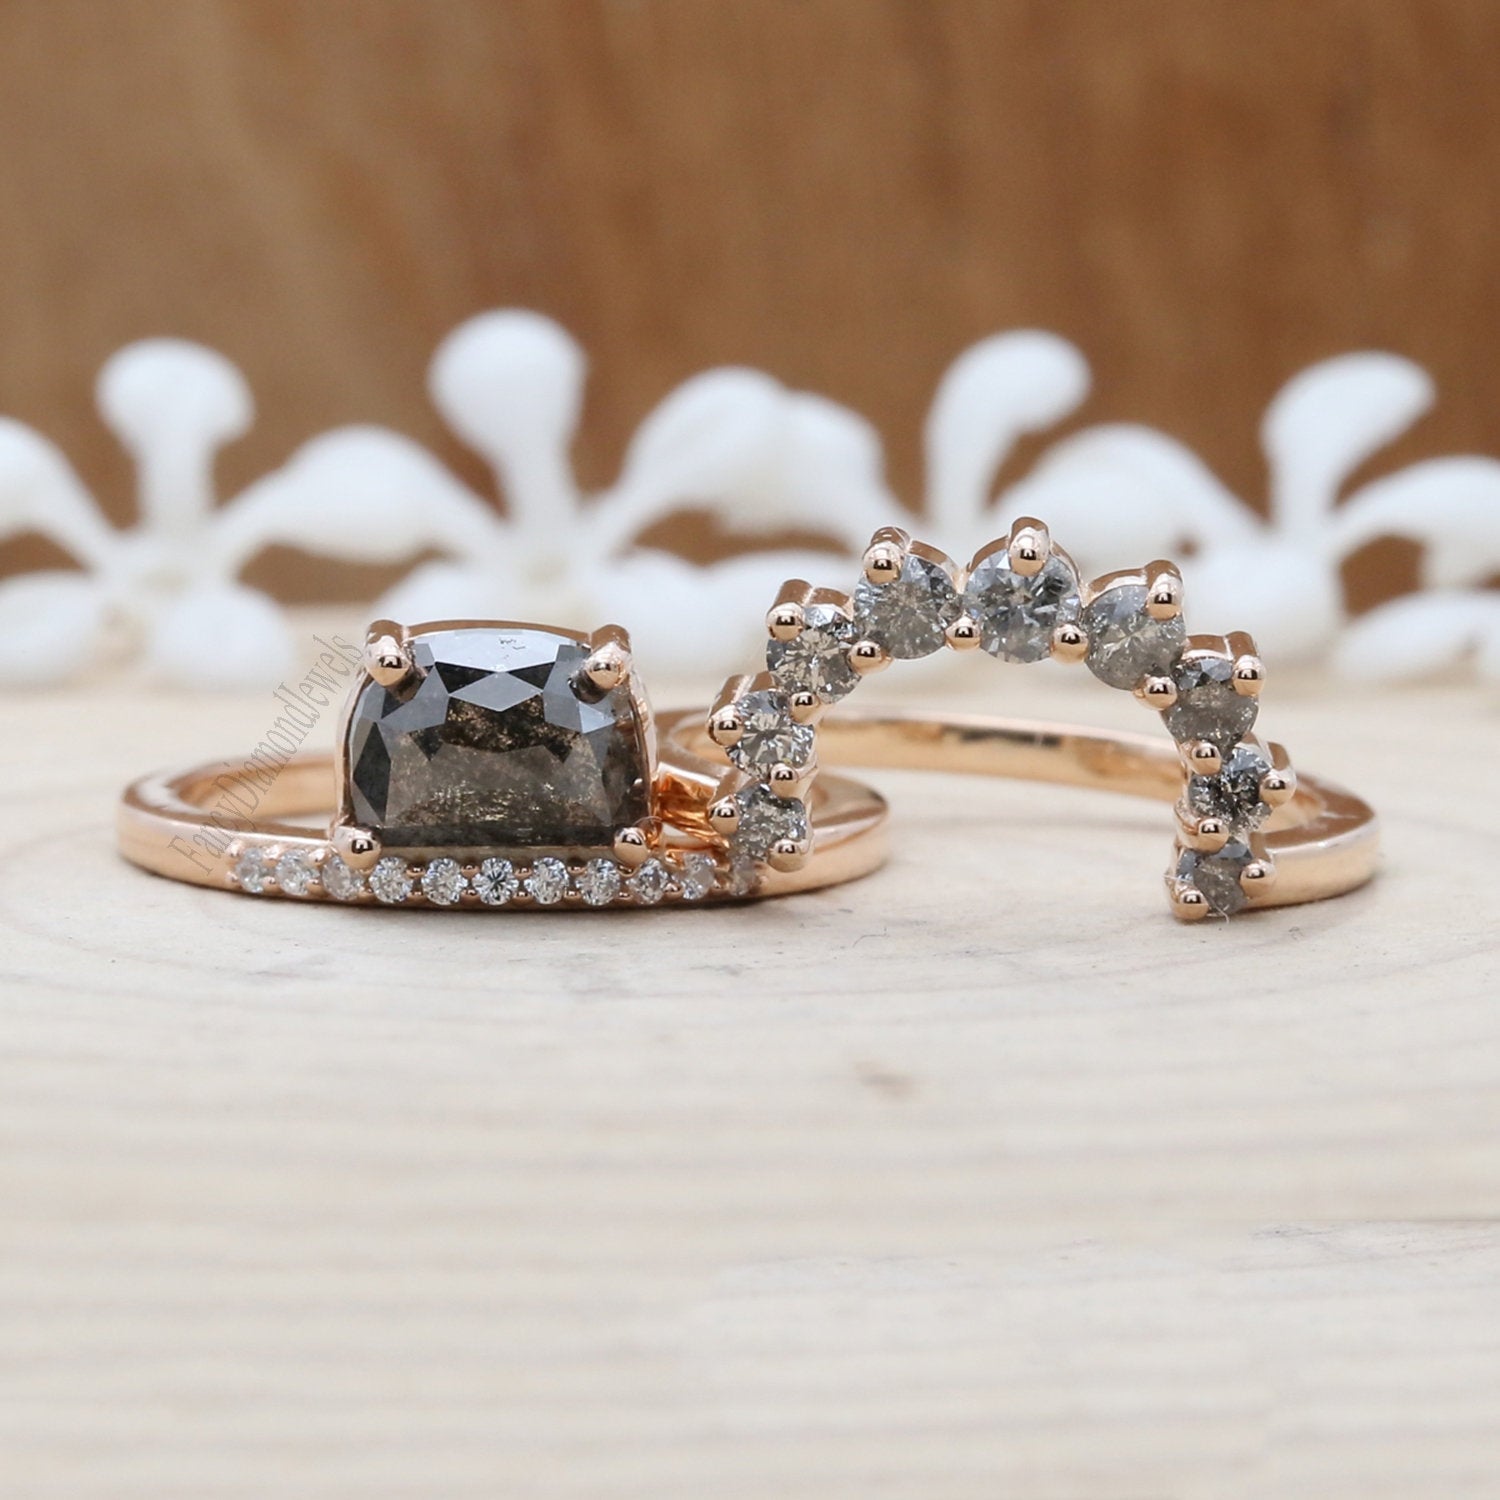 Salt And Pepper Half Moon Diamond 14K Solid Gold Ring Set Engagement Wedding Gift Ring KD803